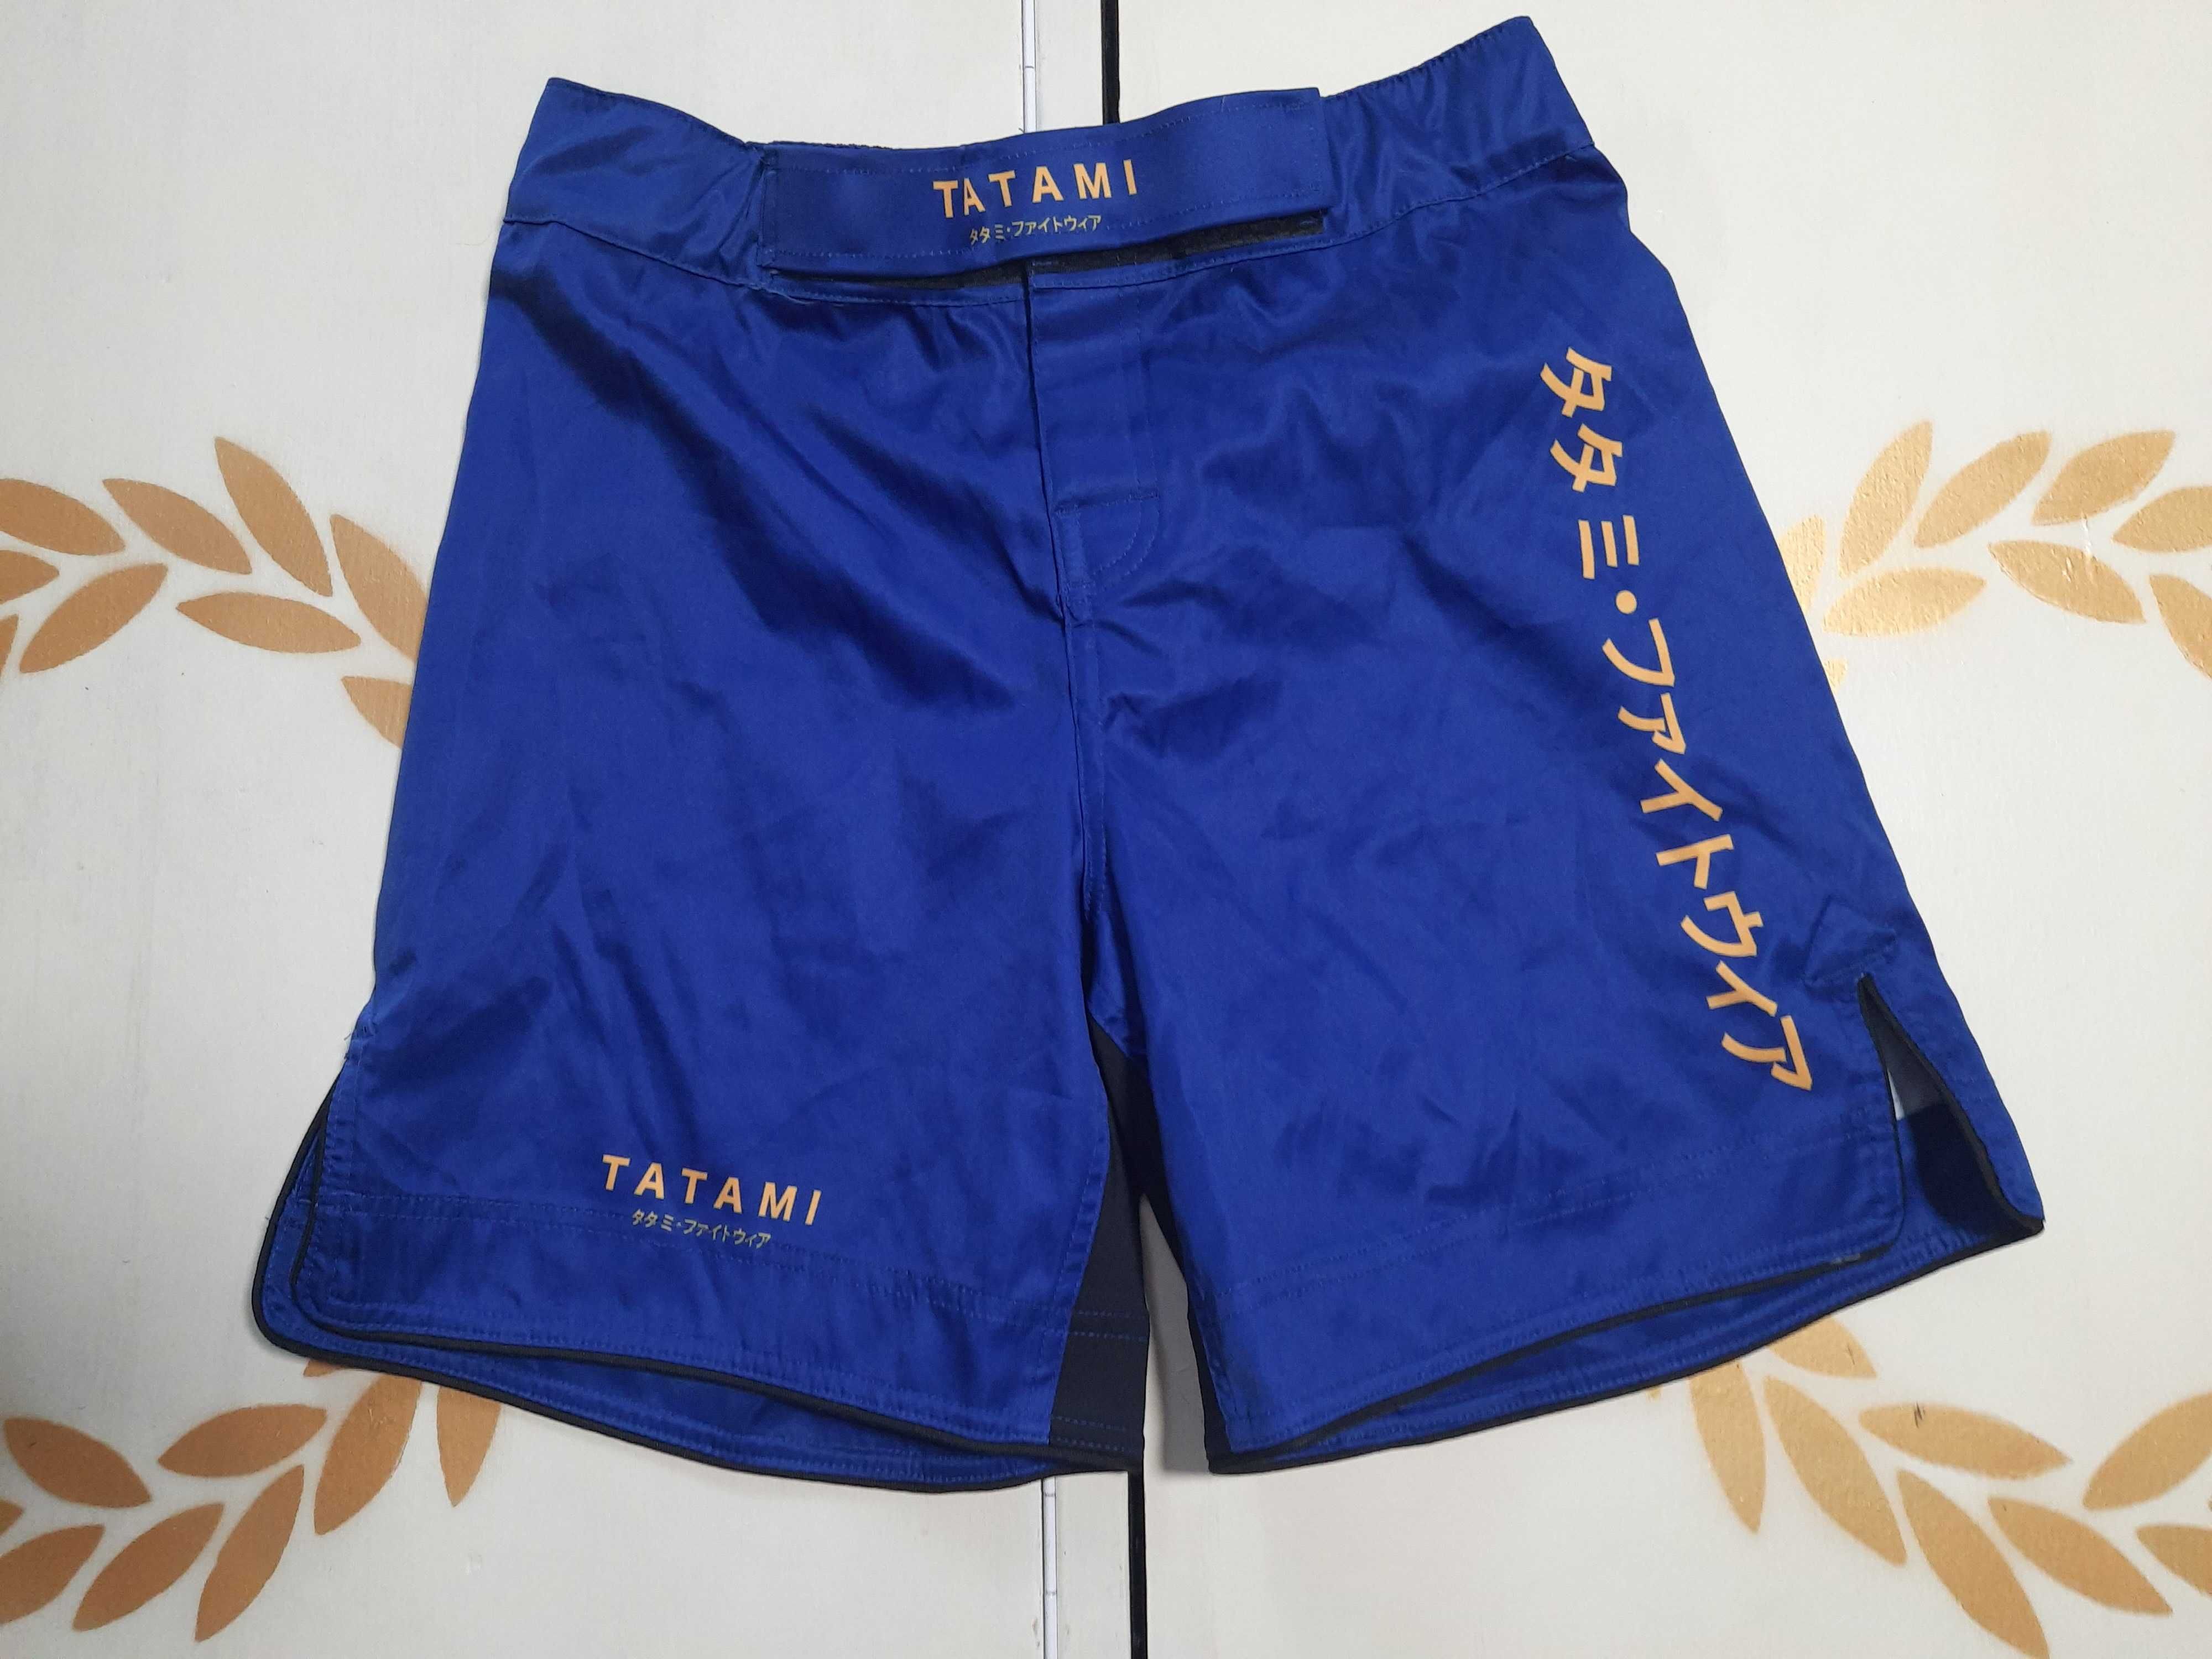 Tatami fighting shorts шорты размер xl жен.